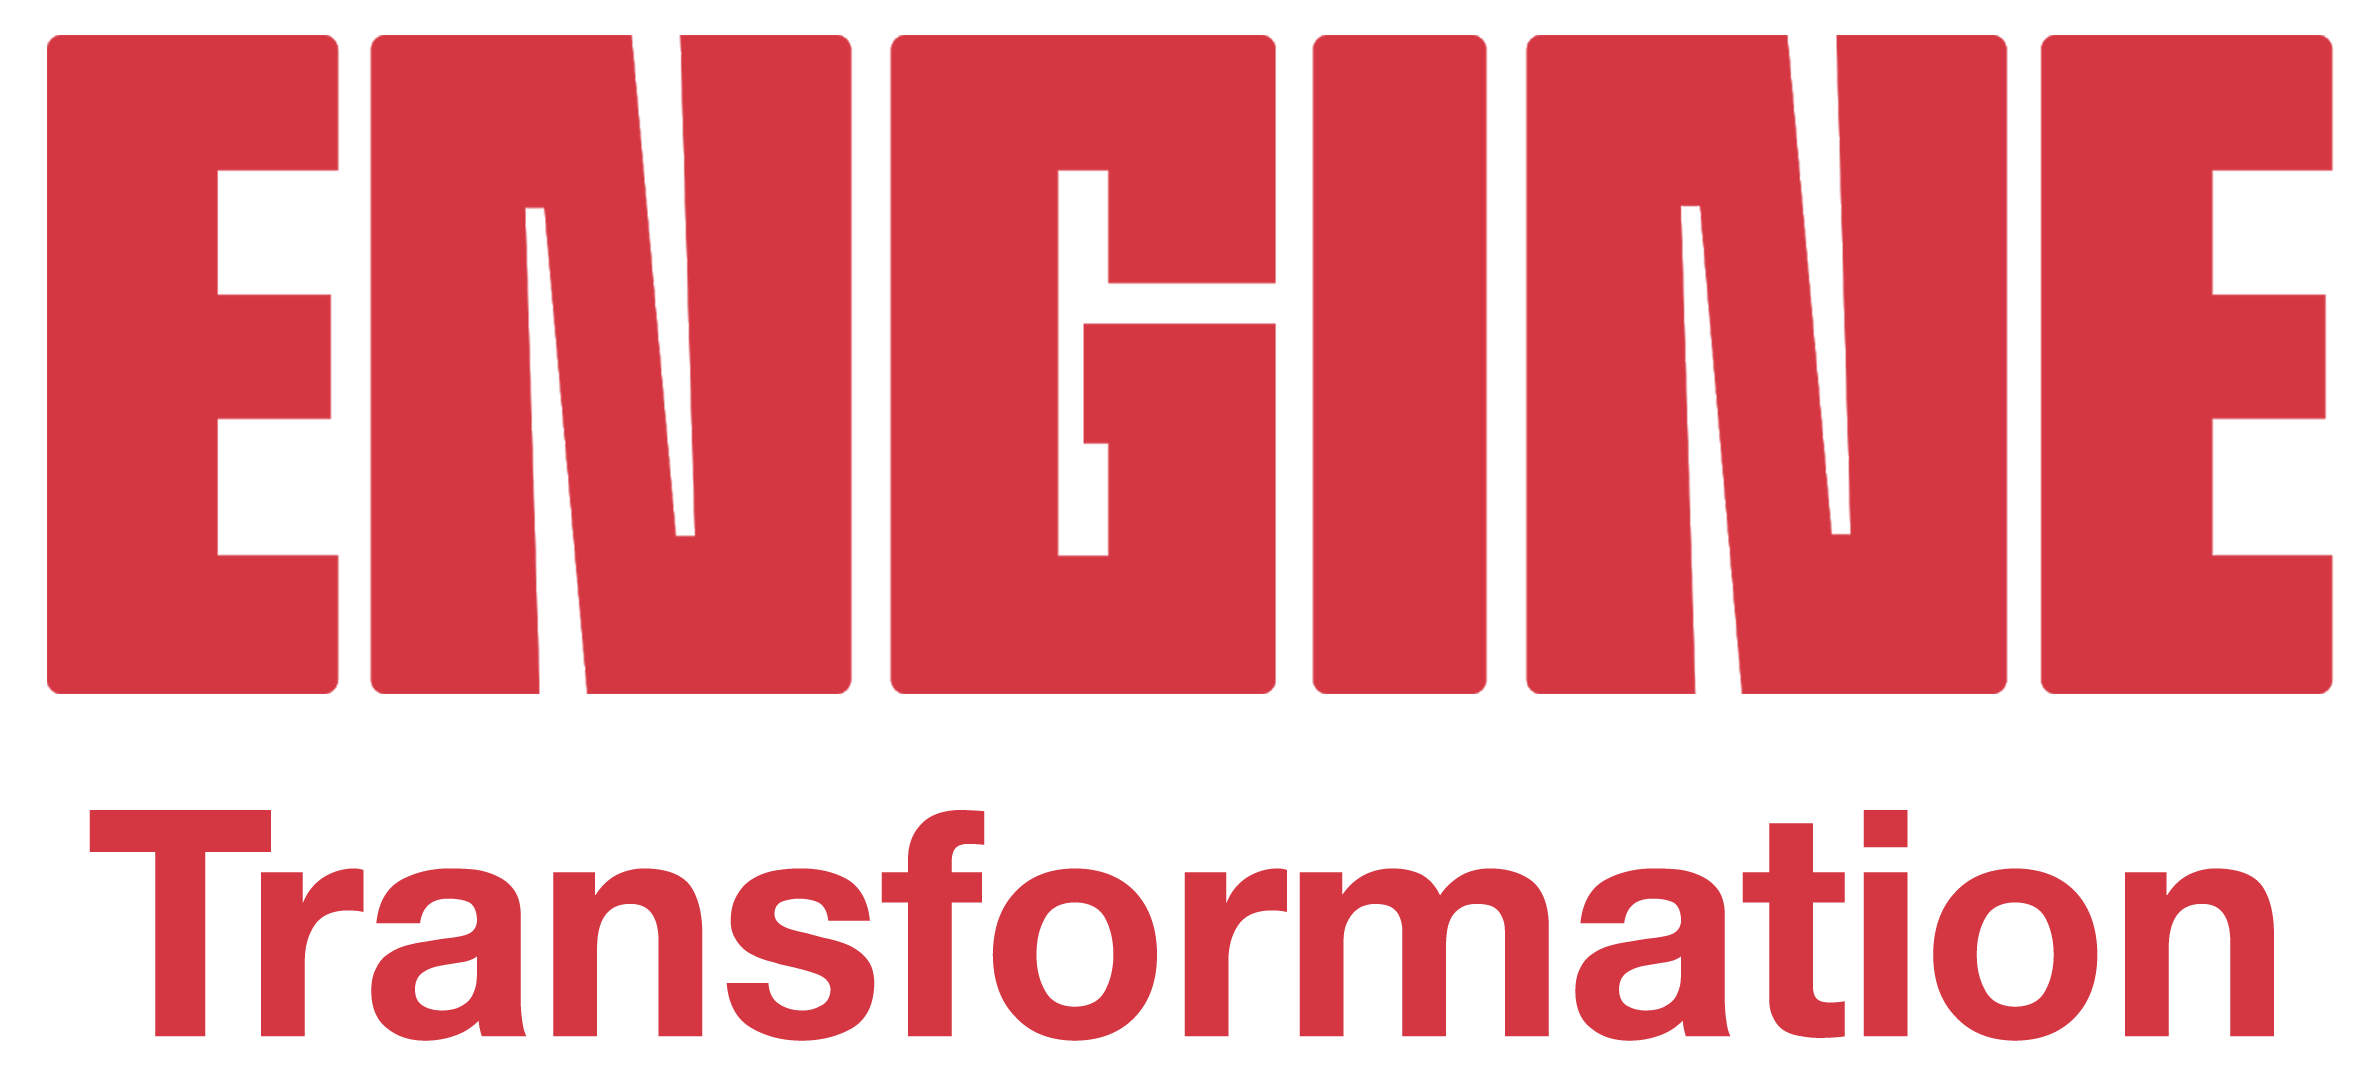 Engine Transformation Company Logo